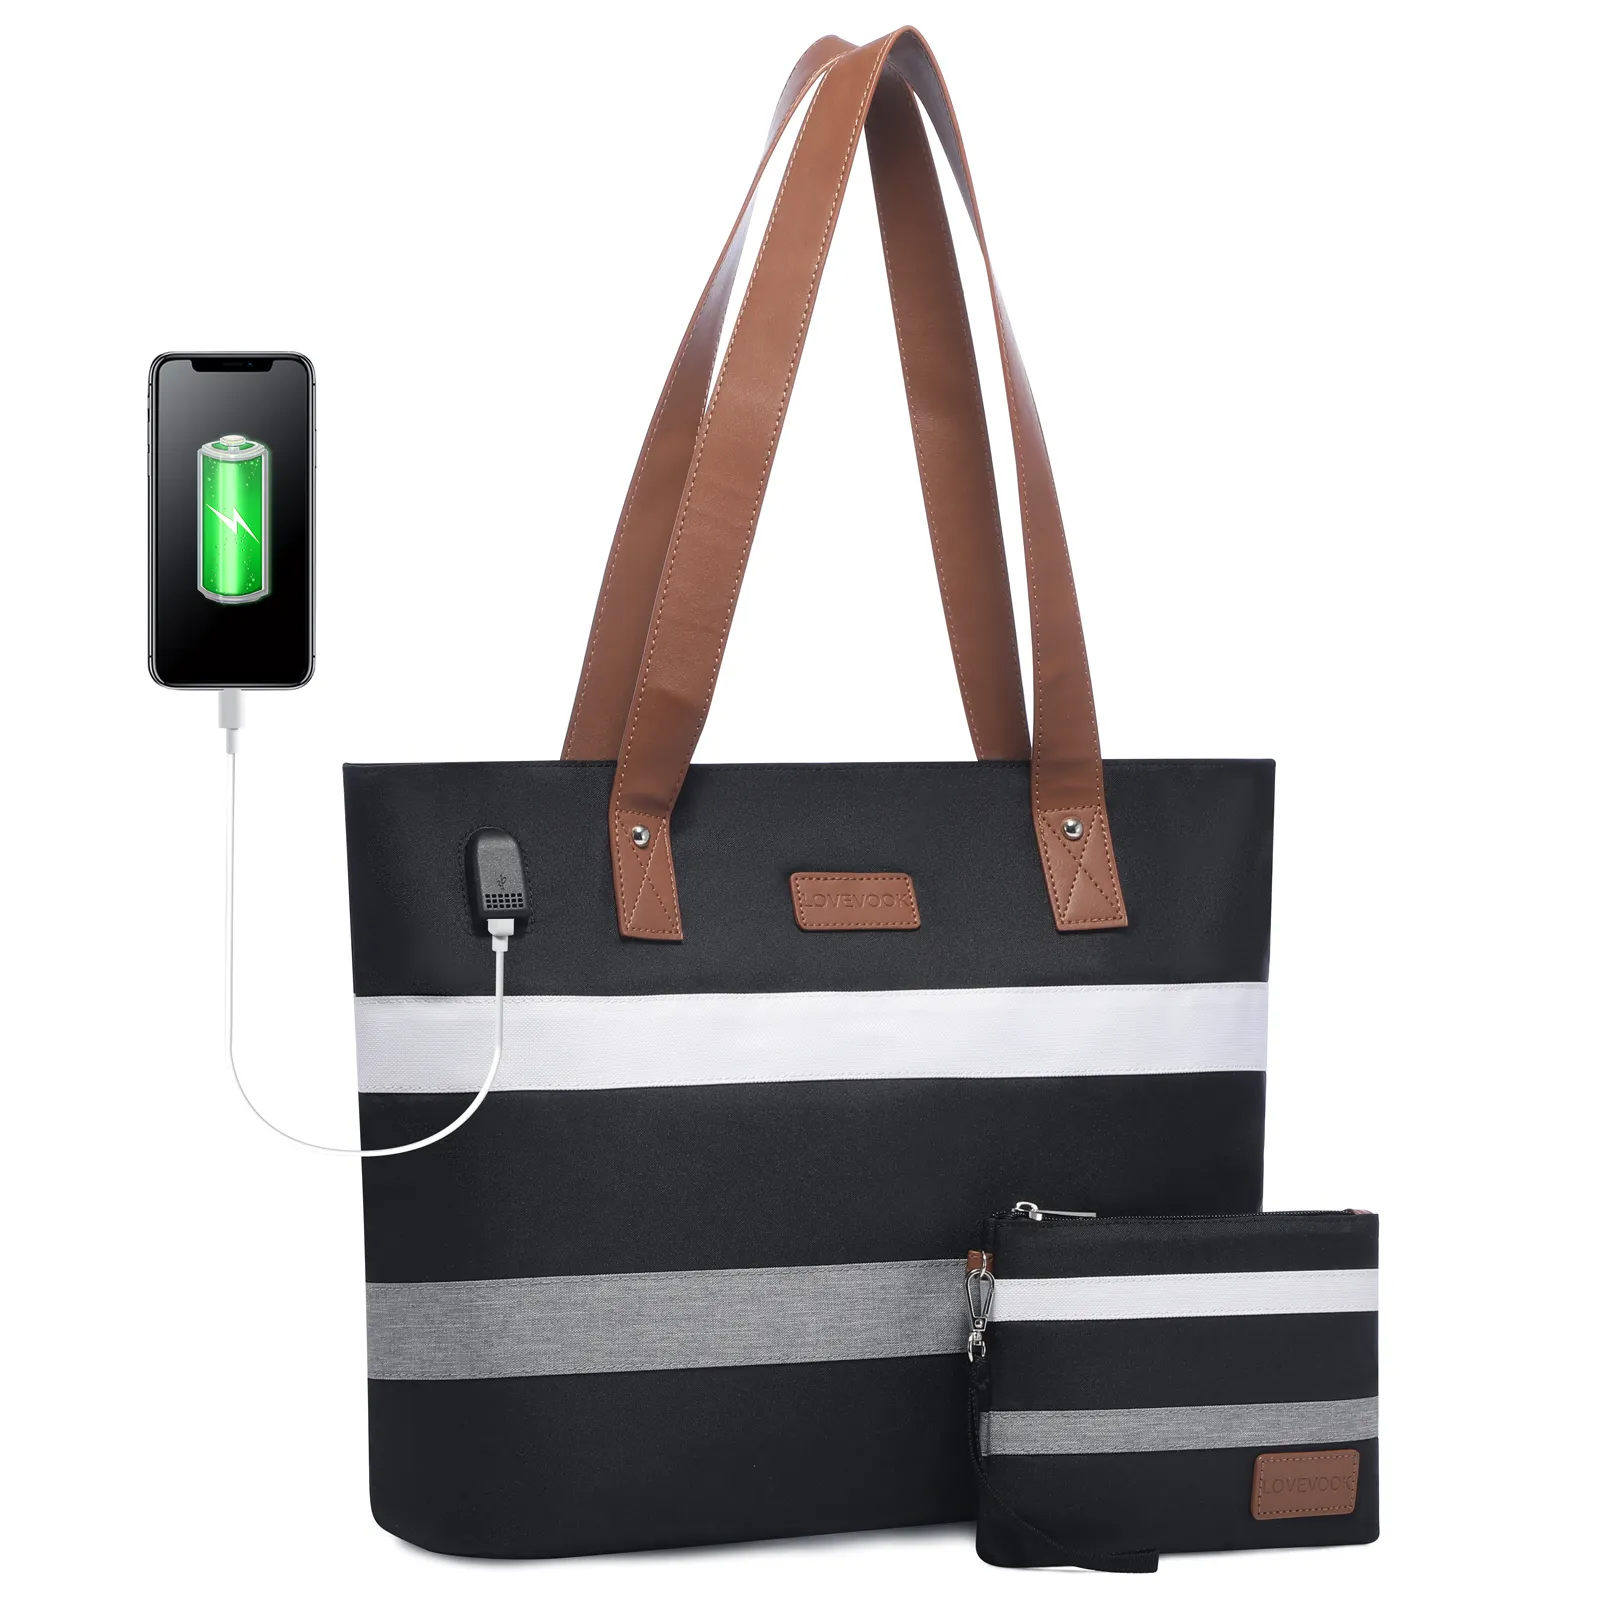 2pc/set Waterproof Lightweight Oxford Handbag Set Fits 15.6 in Shoulder bag Purse Work School Laptop Tote Bag for Women with USB